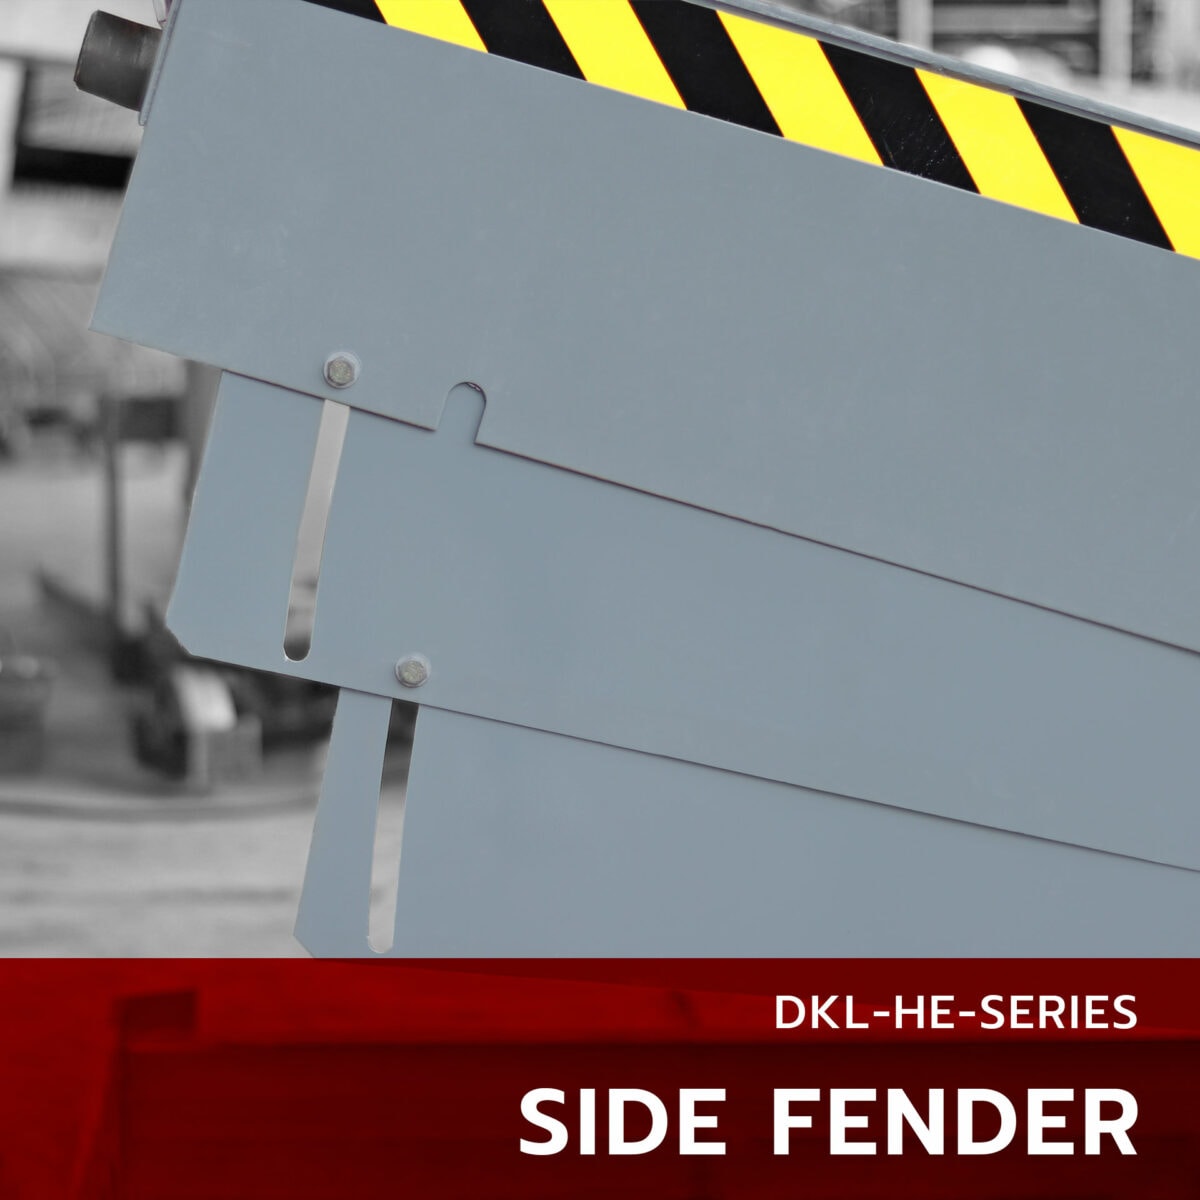 Side Fender สะพานปรับระดับ โหลดสินค้า รุ่น DKL-HE-SERIES